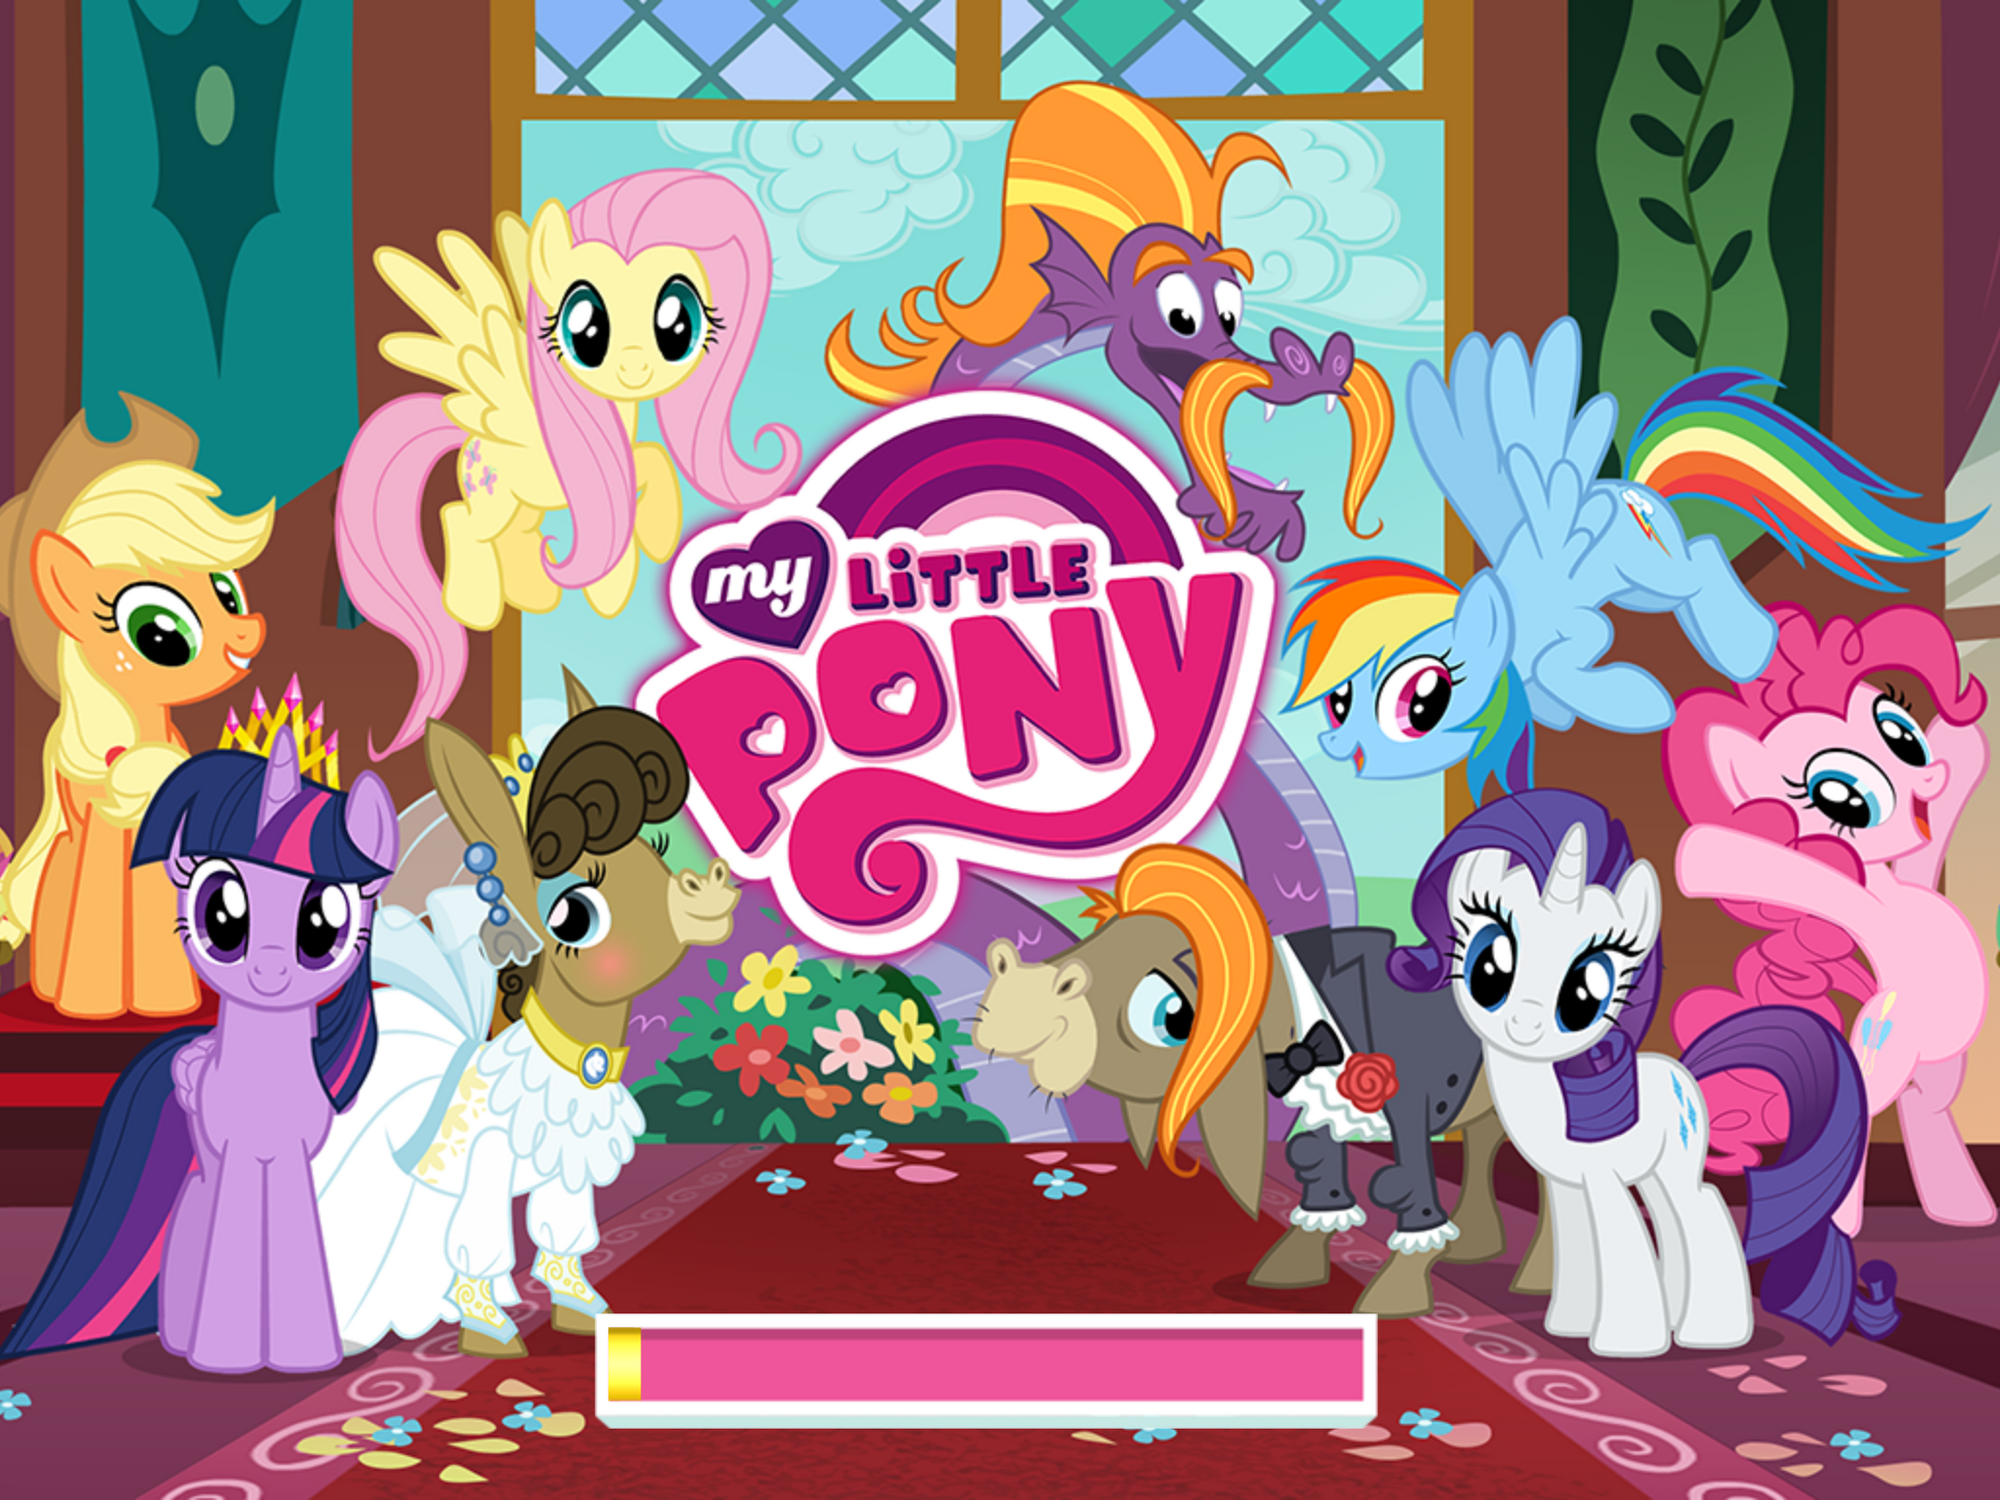 Игры май литл гонки. My little Pony игра. Игра MLP Gameloft. My little Pony Friendship is Magic игра. Игра my little Pony от Gameloft.